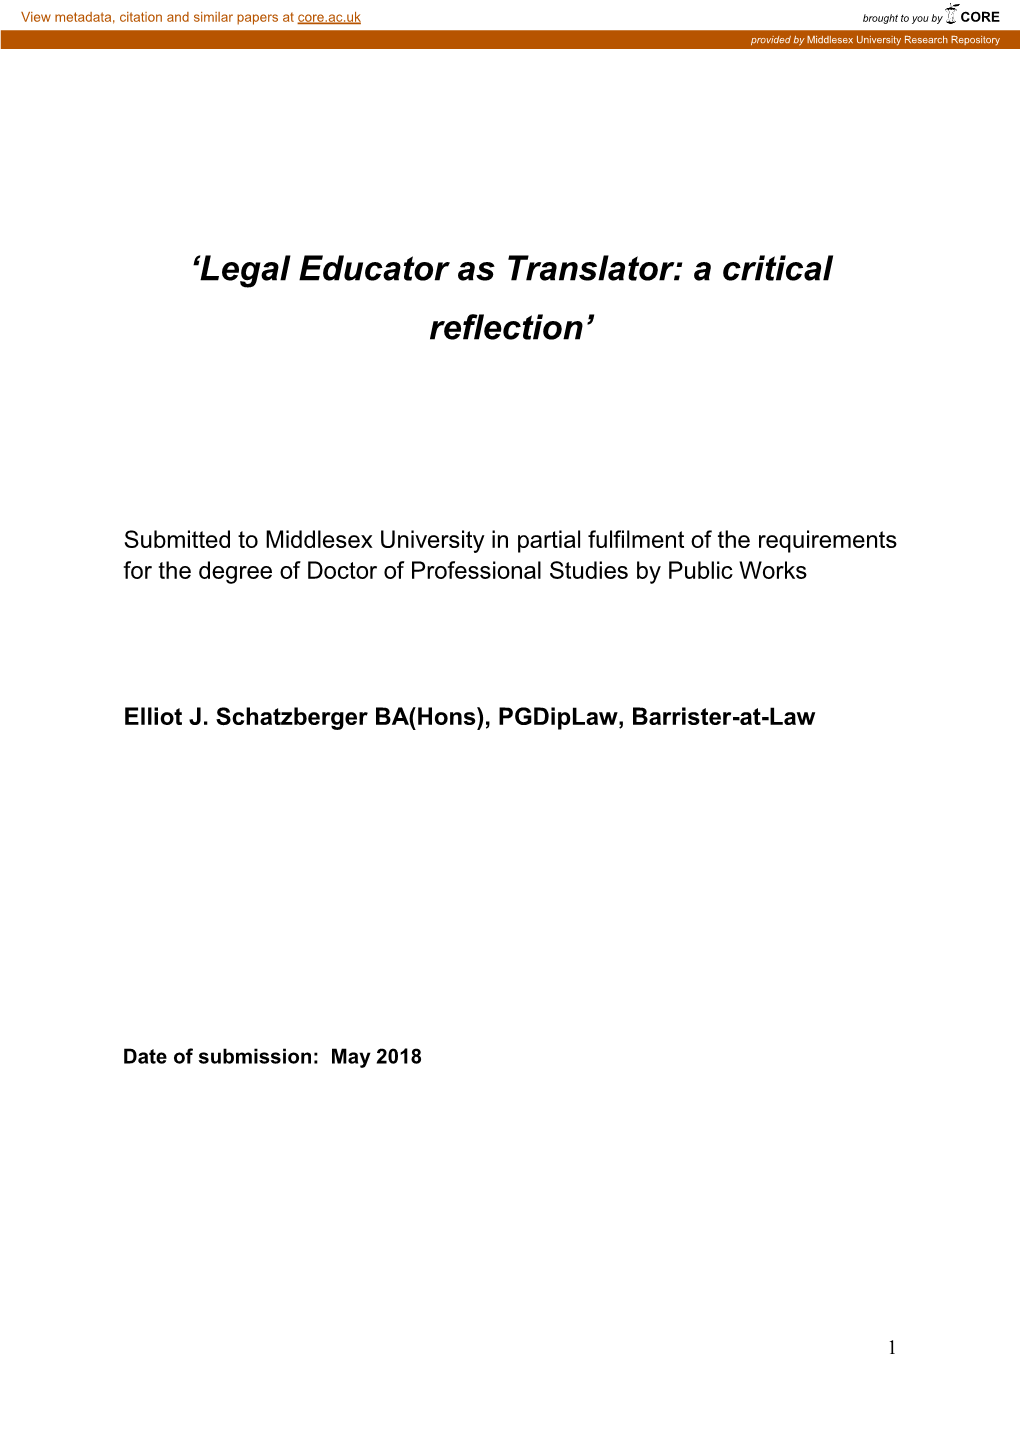 'Legal Educator As Translator: a Critical Reflection'